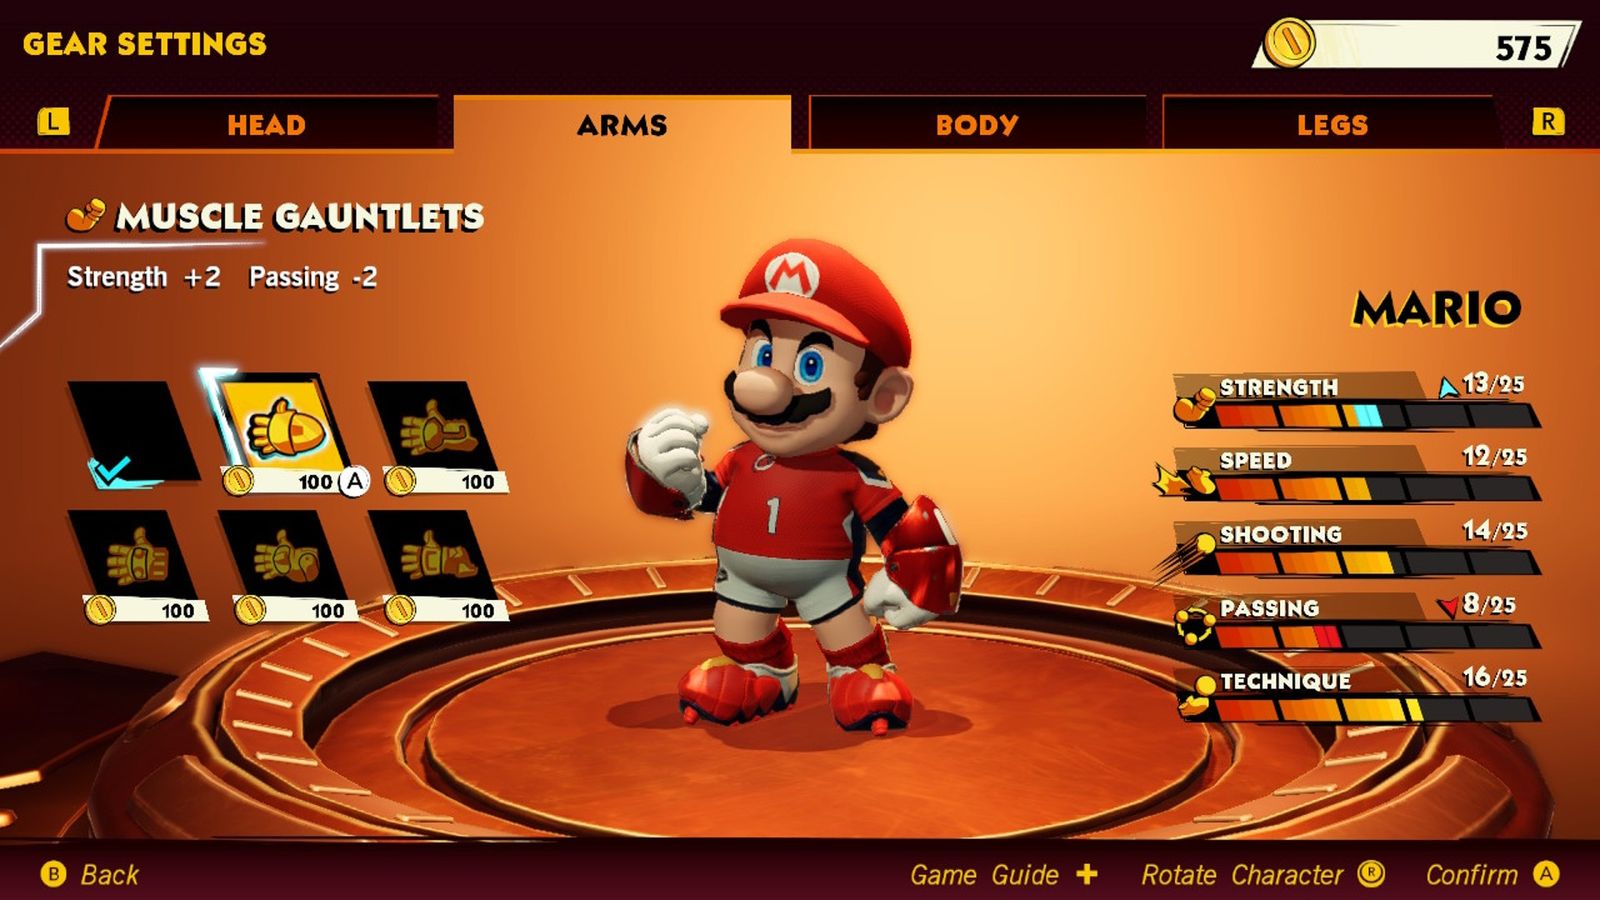 Image of the Gear Settings menu in Mario Strikers: Battle League.